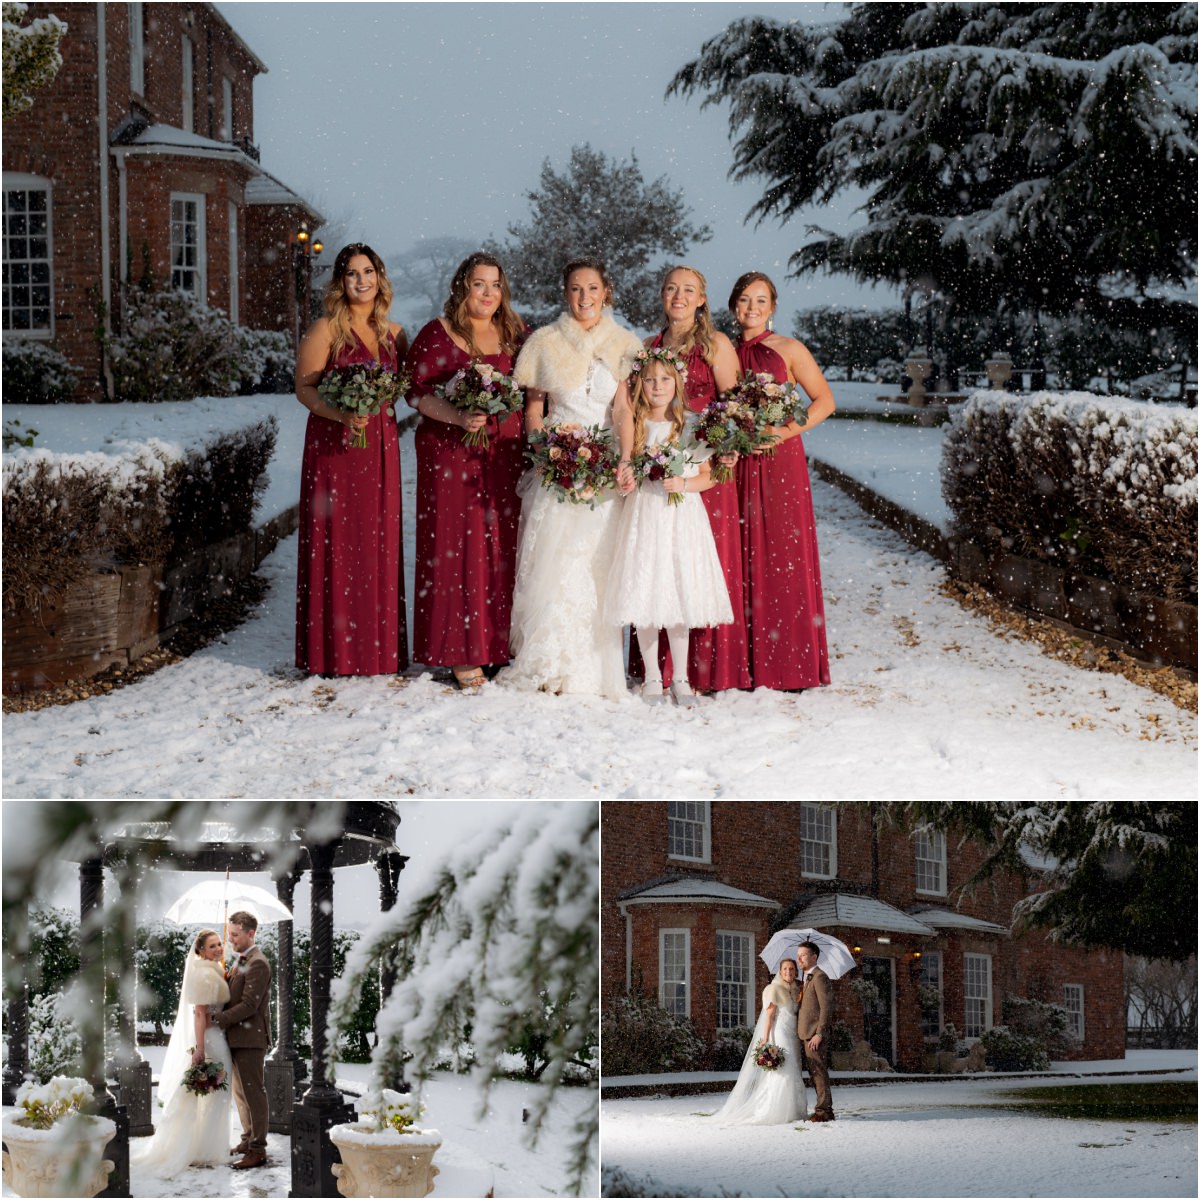 Swancar Farm Wedding Photography in the snow